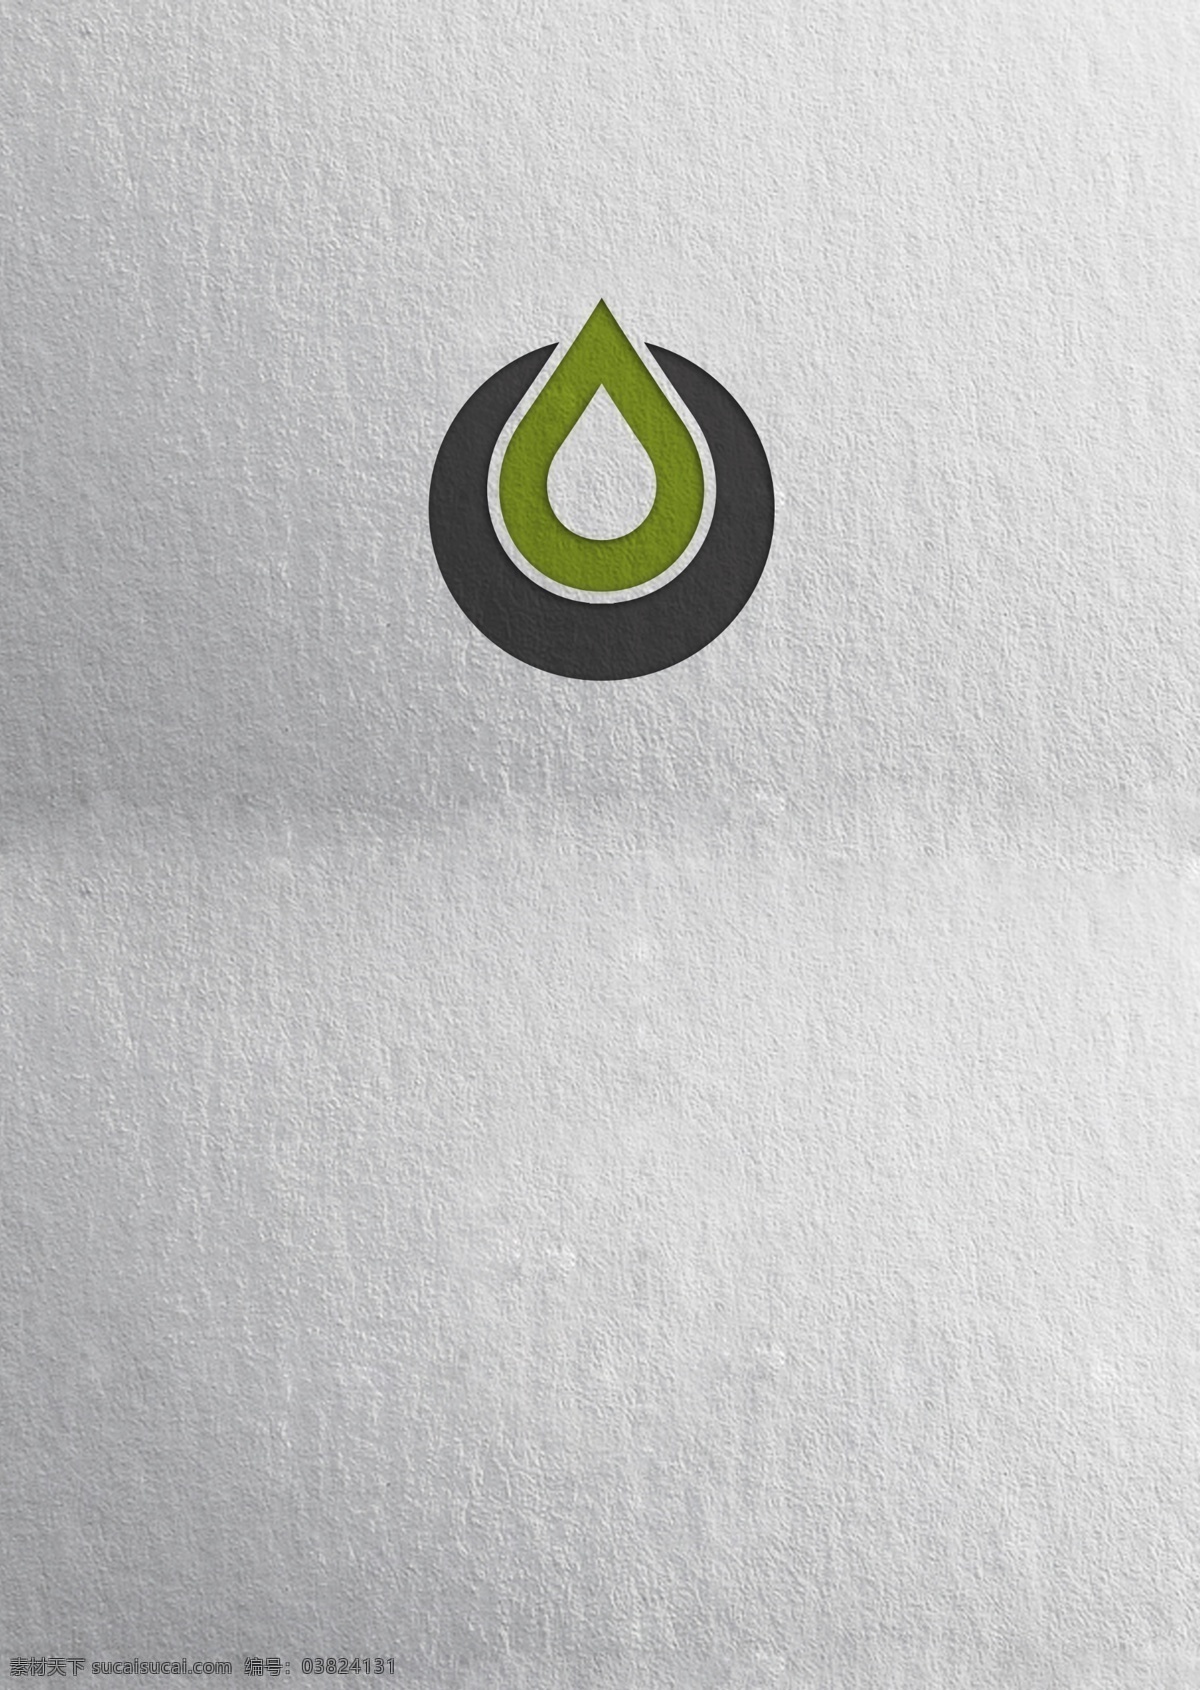 logo 绿色环保 农业 简约 生命 绿色 环保 能量 融入 土壤 展现生机